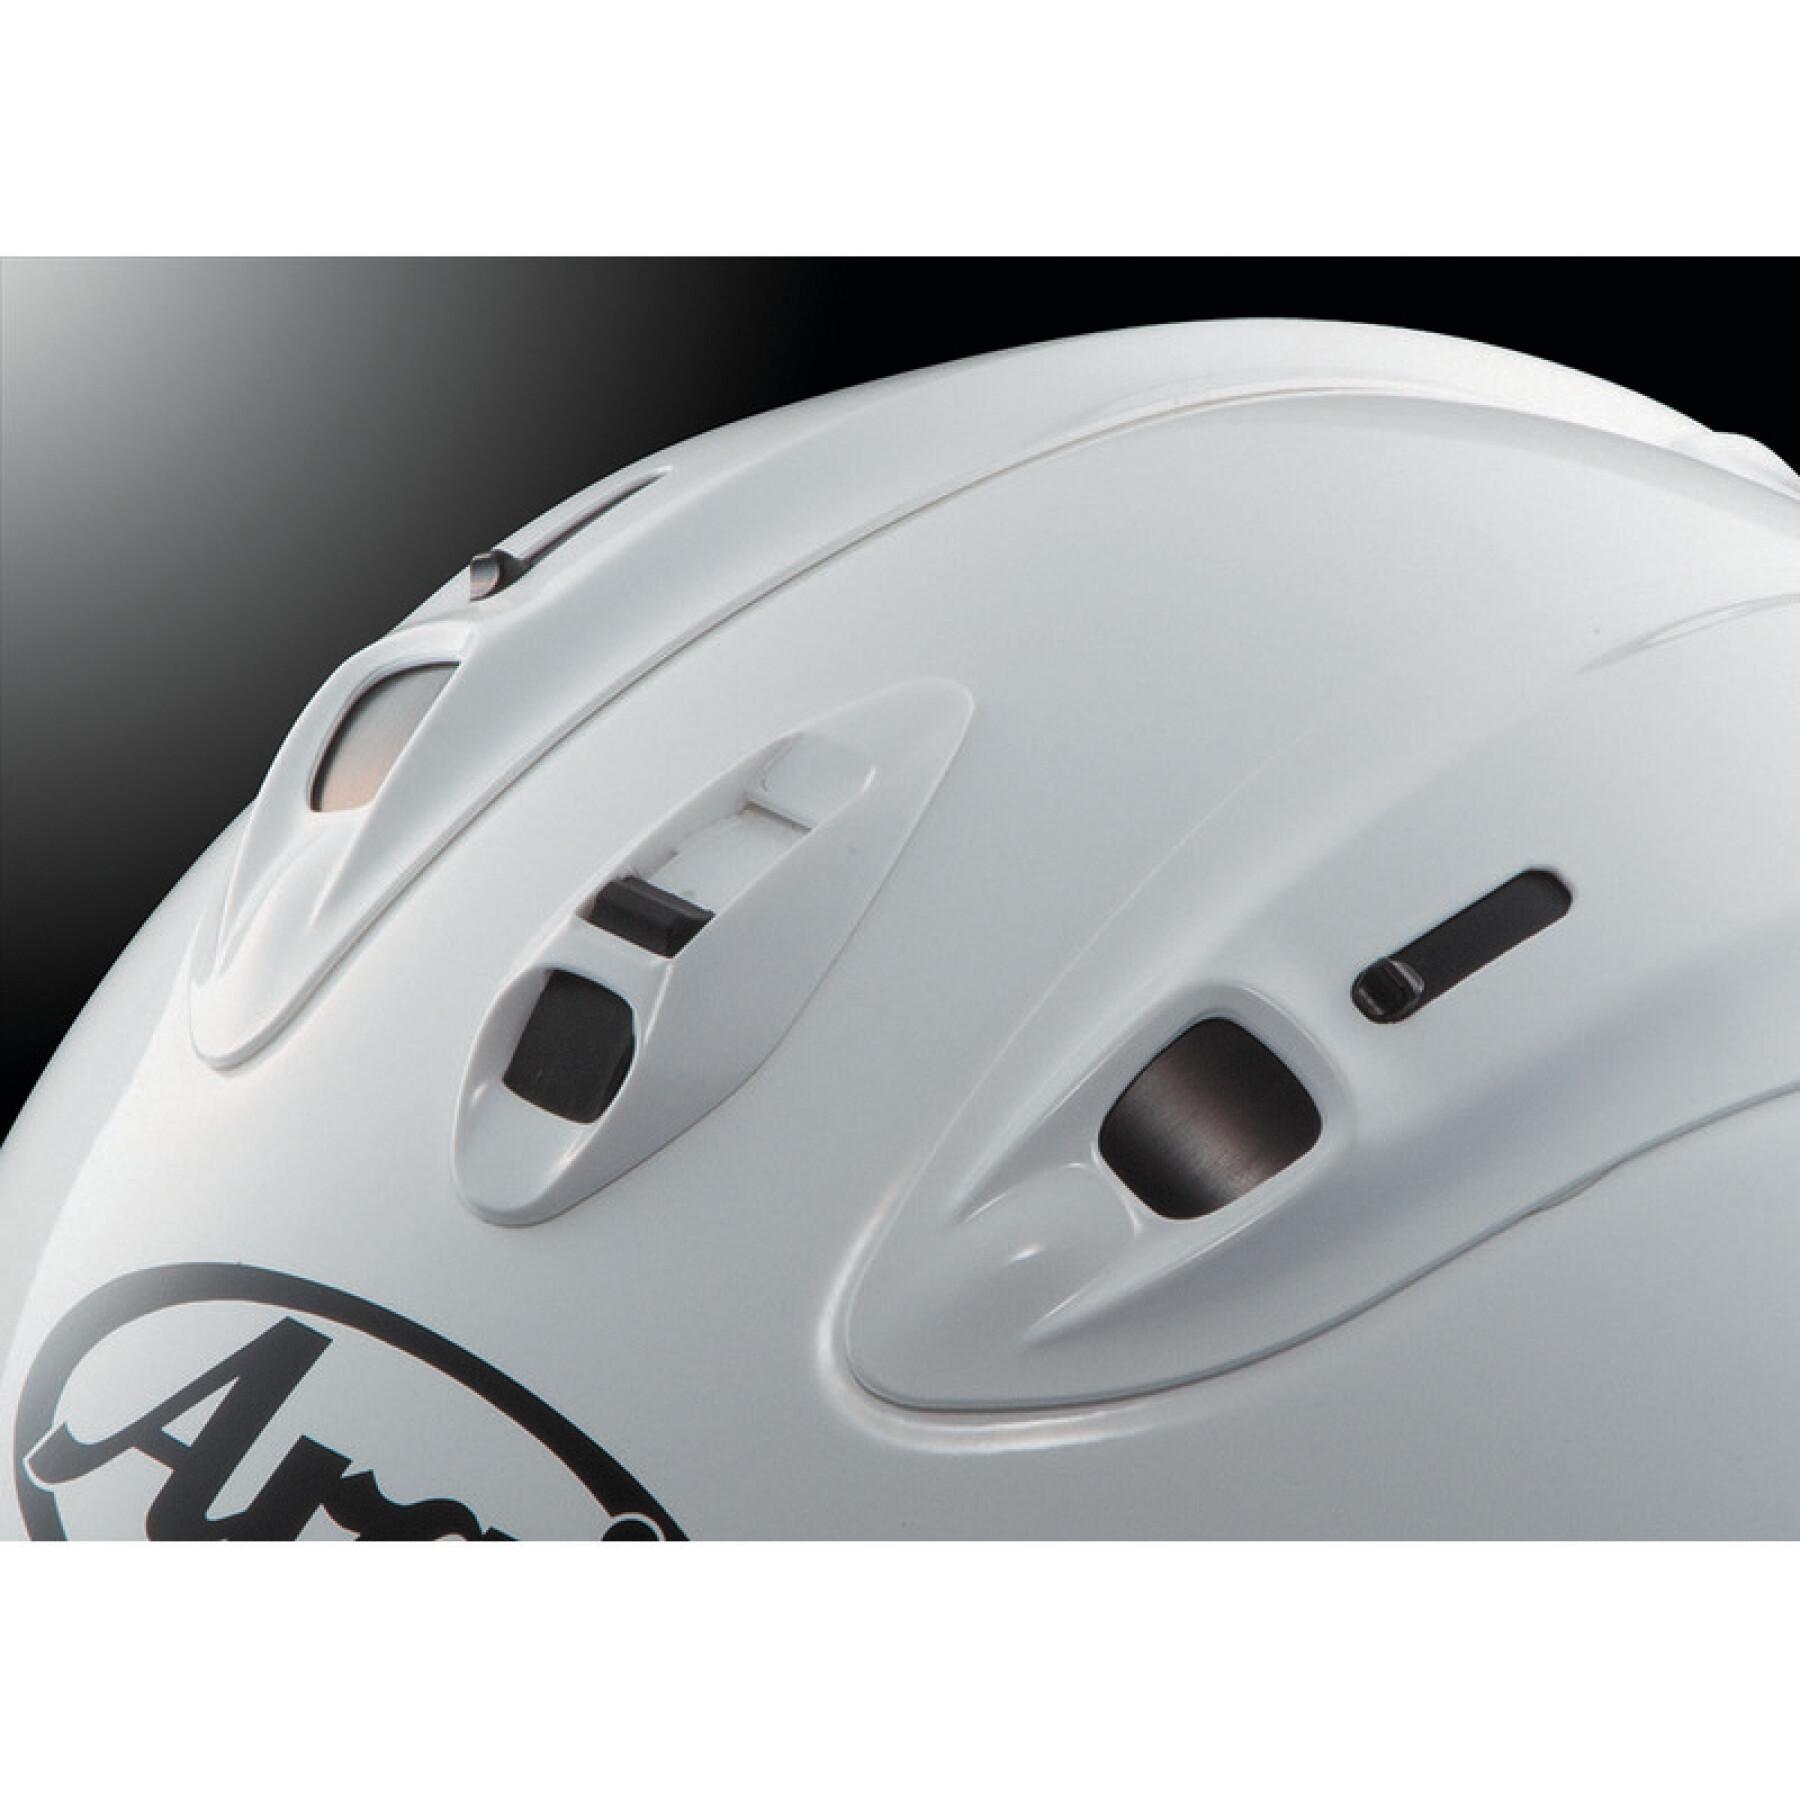 Ventilación central superior del casco de moto Arai IC-Duct-5 Café Racer SZ-Ram-X